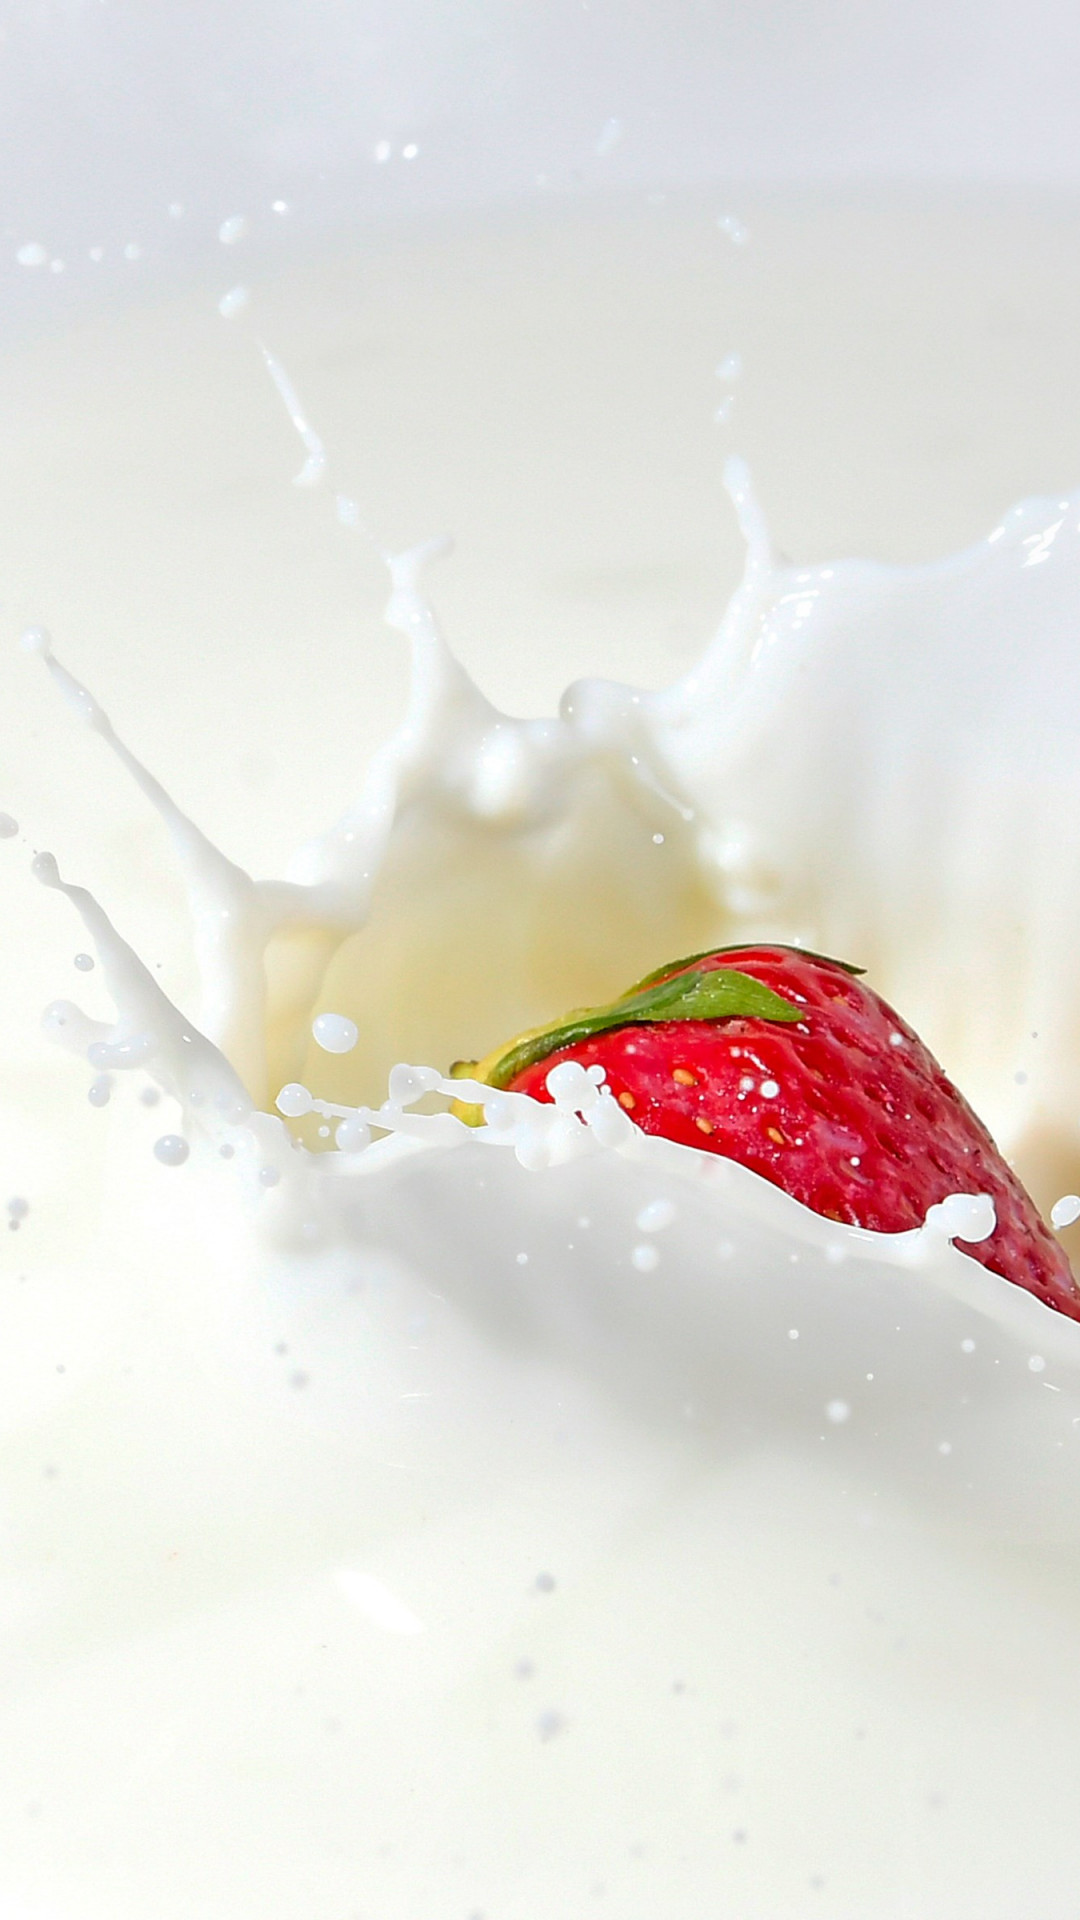 Strawberry splashing in milk wallpaper 1080x1920